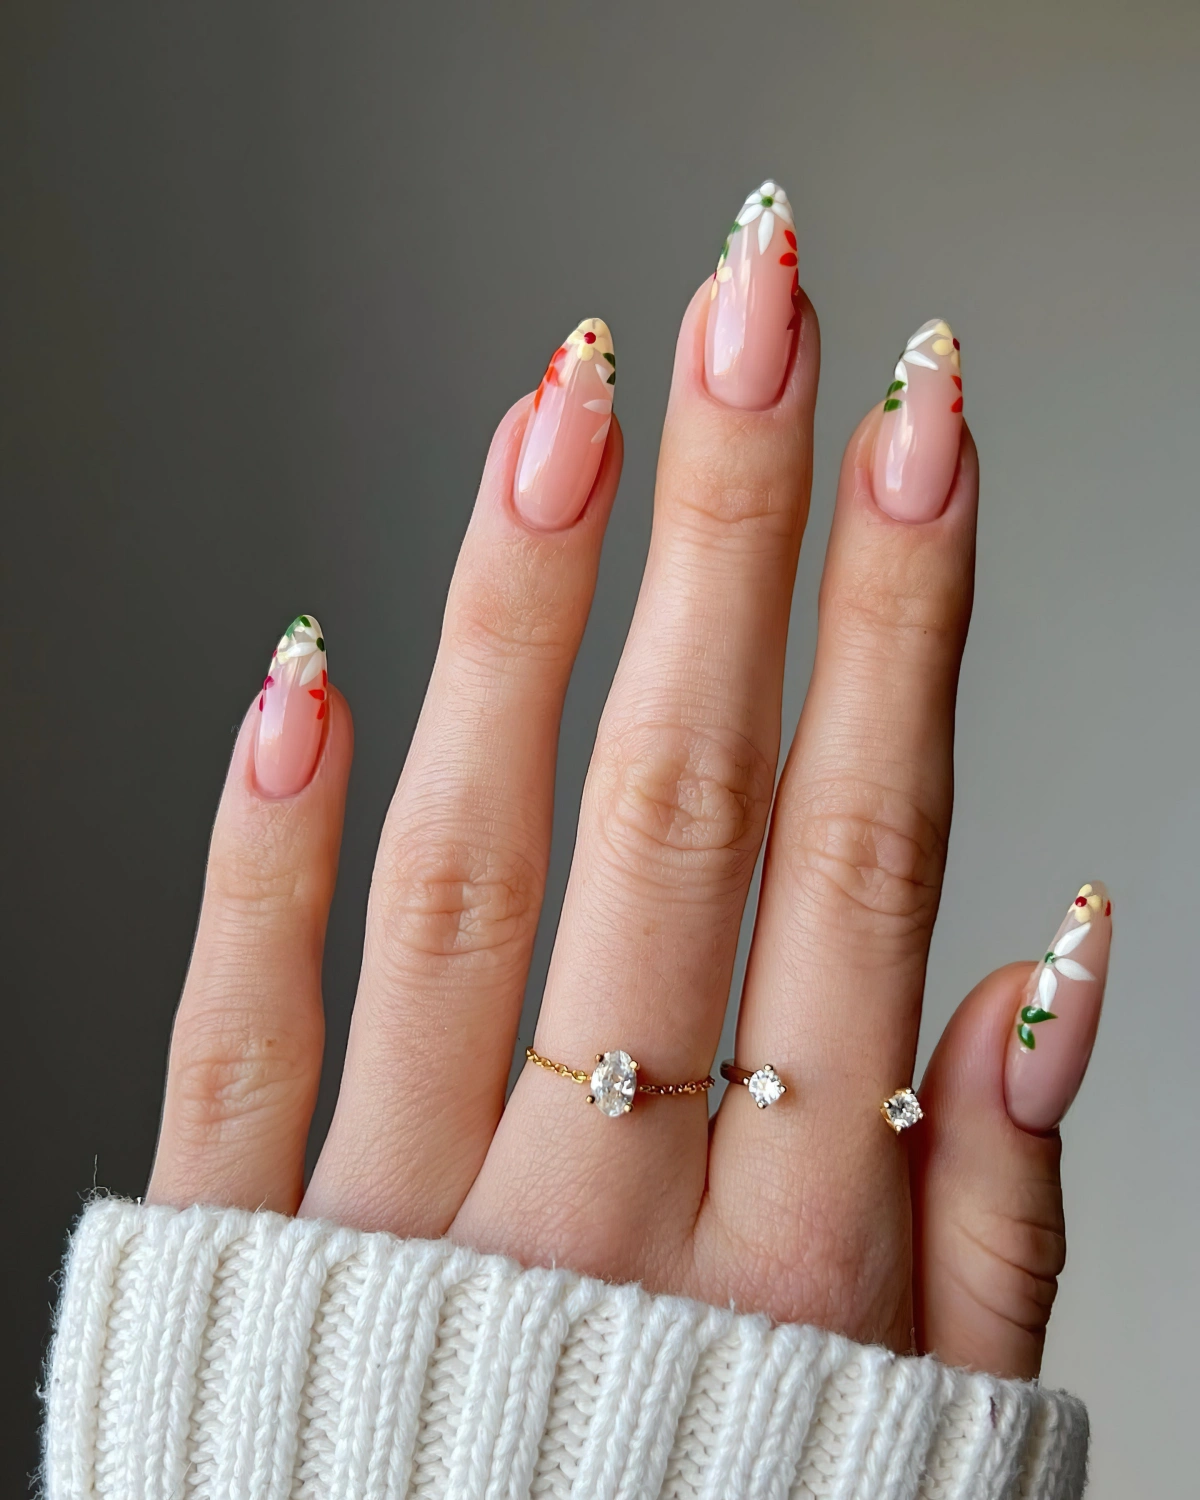 ongles french nail art dessins fleurs pointes base transparente